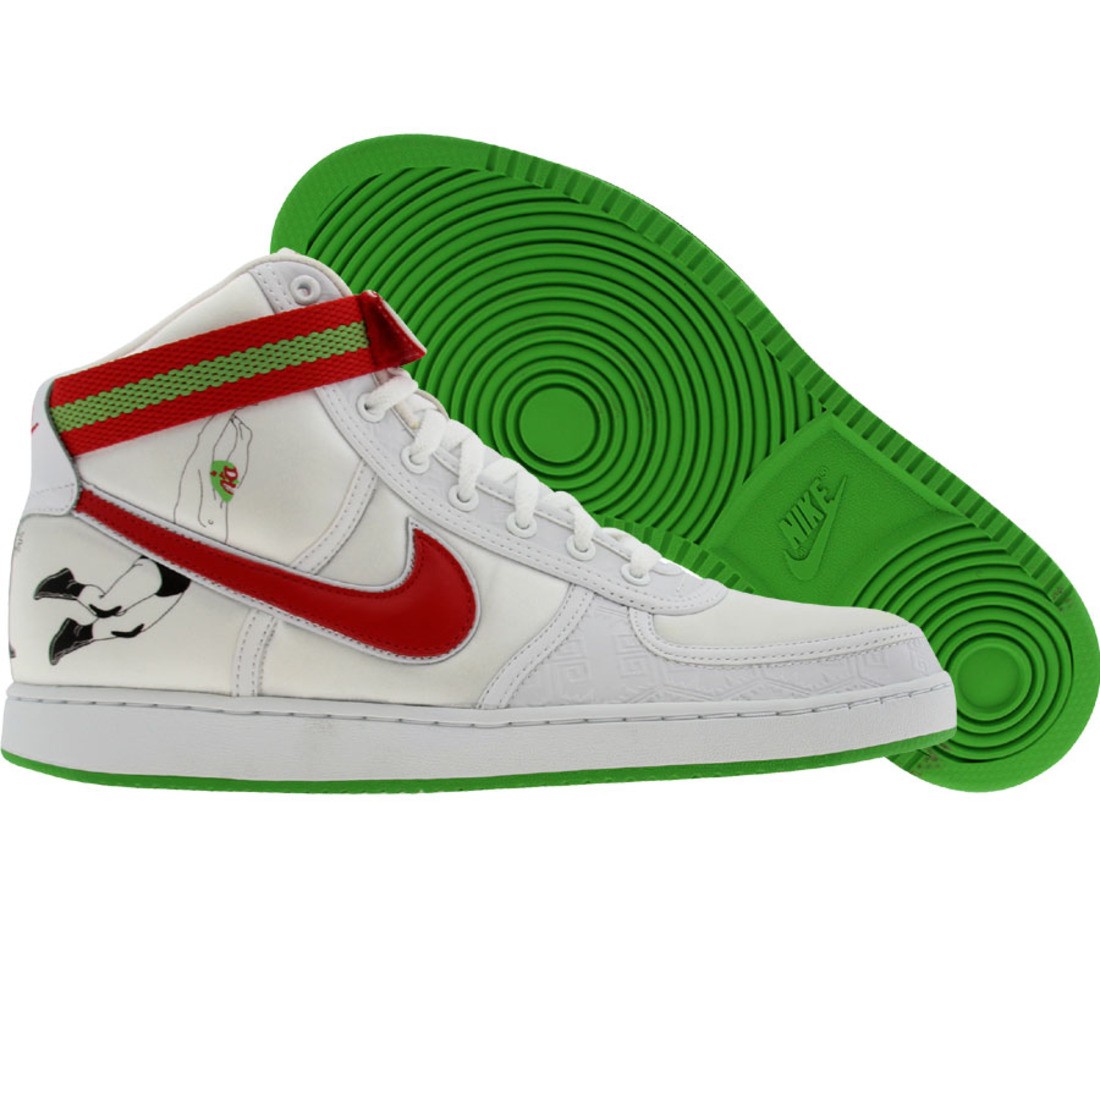 Nike Vandal High Premium Lucha Libre Wrestling Edition (white / sport red / green bean)